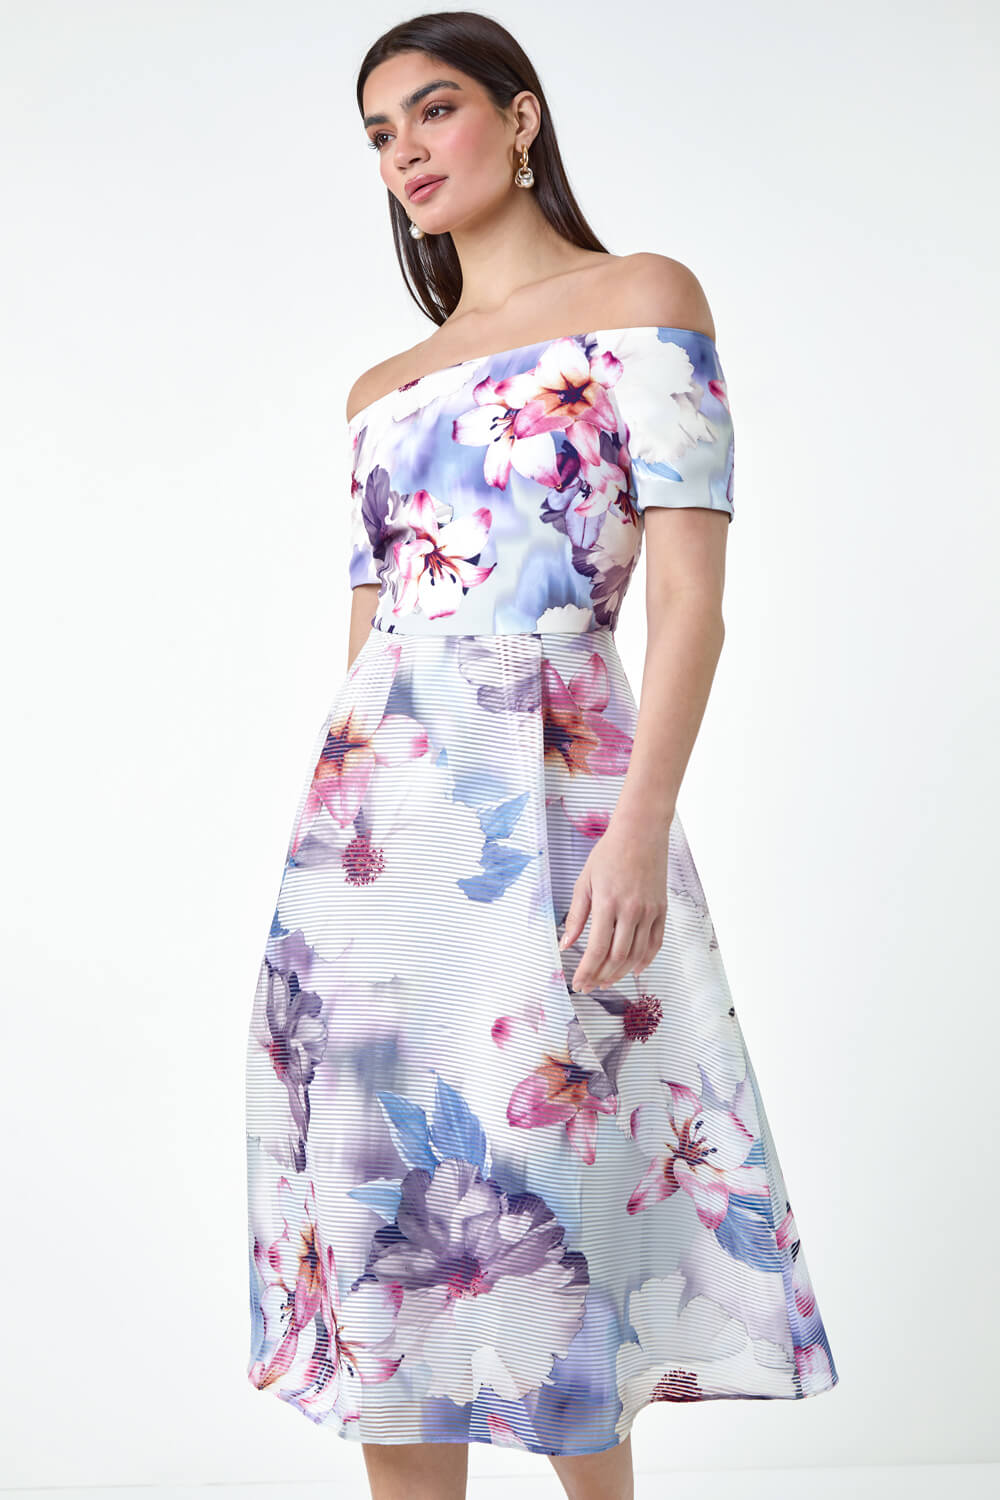 Grey Floral Print Premium Stretch Bardot Dress, Image 3 of 6